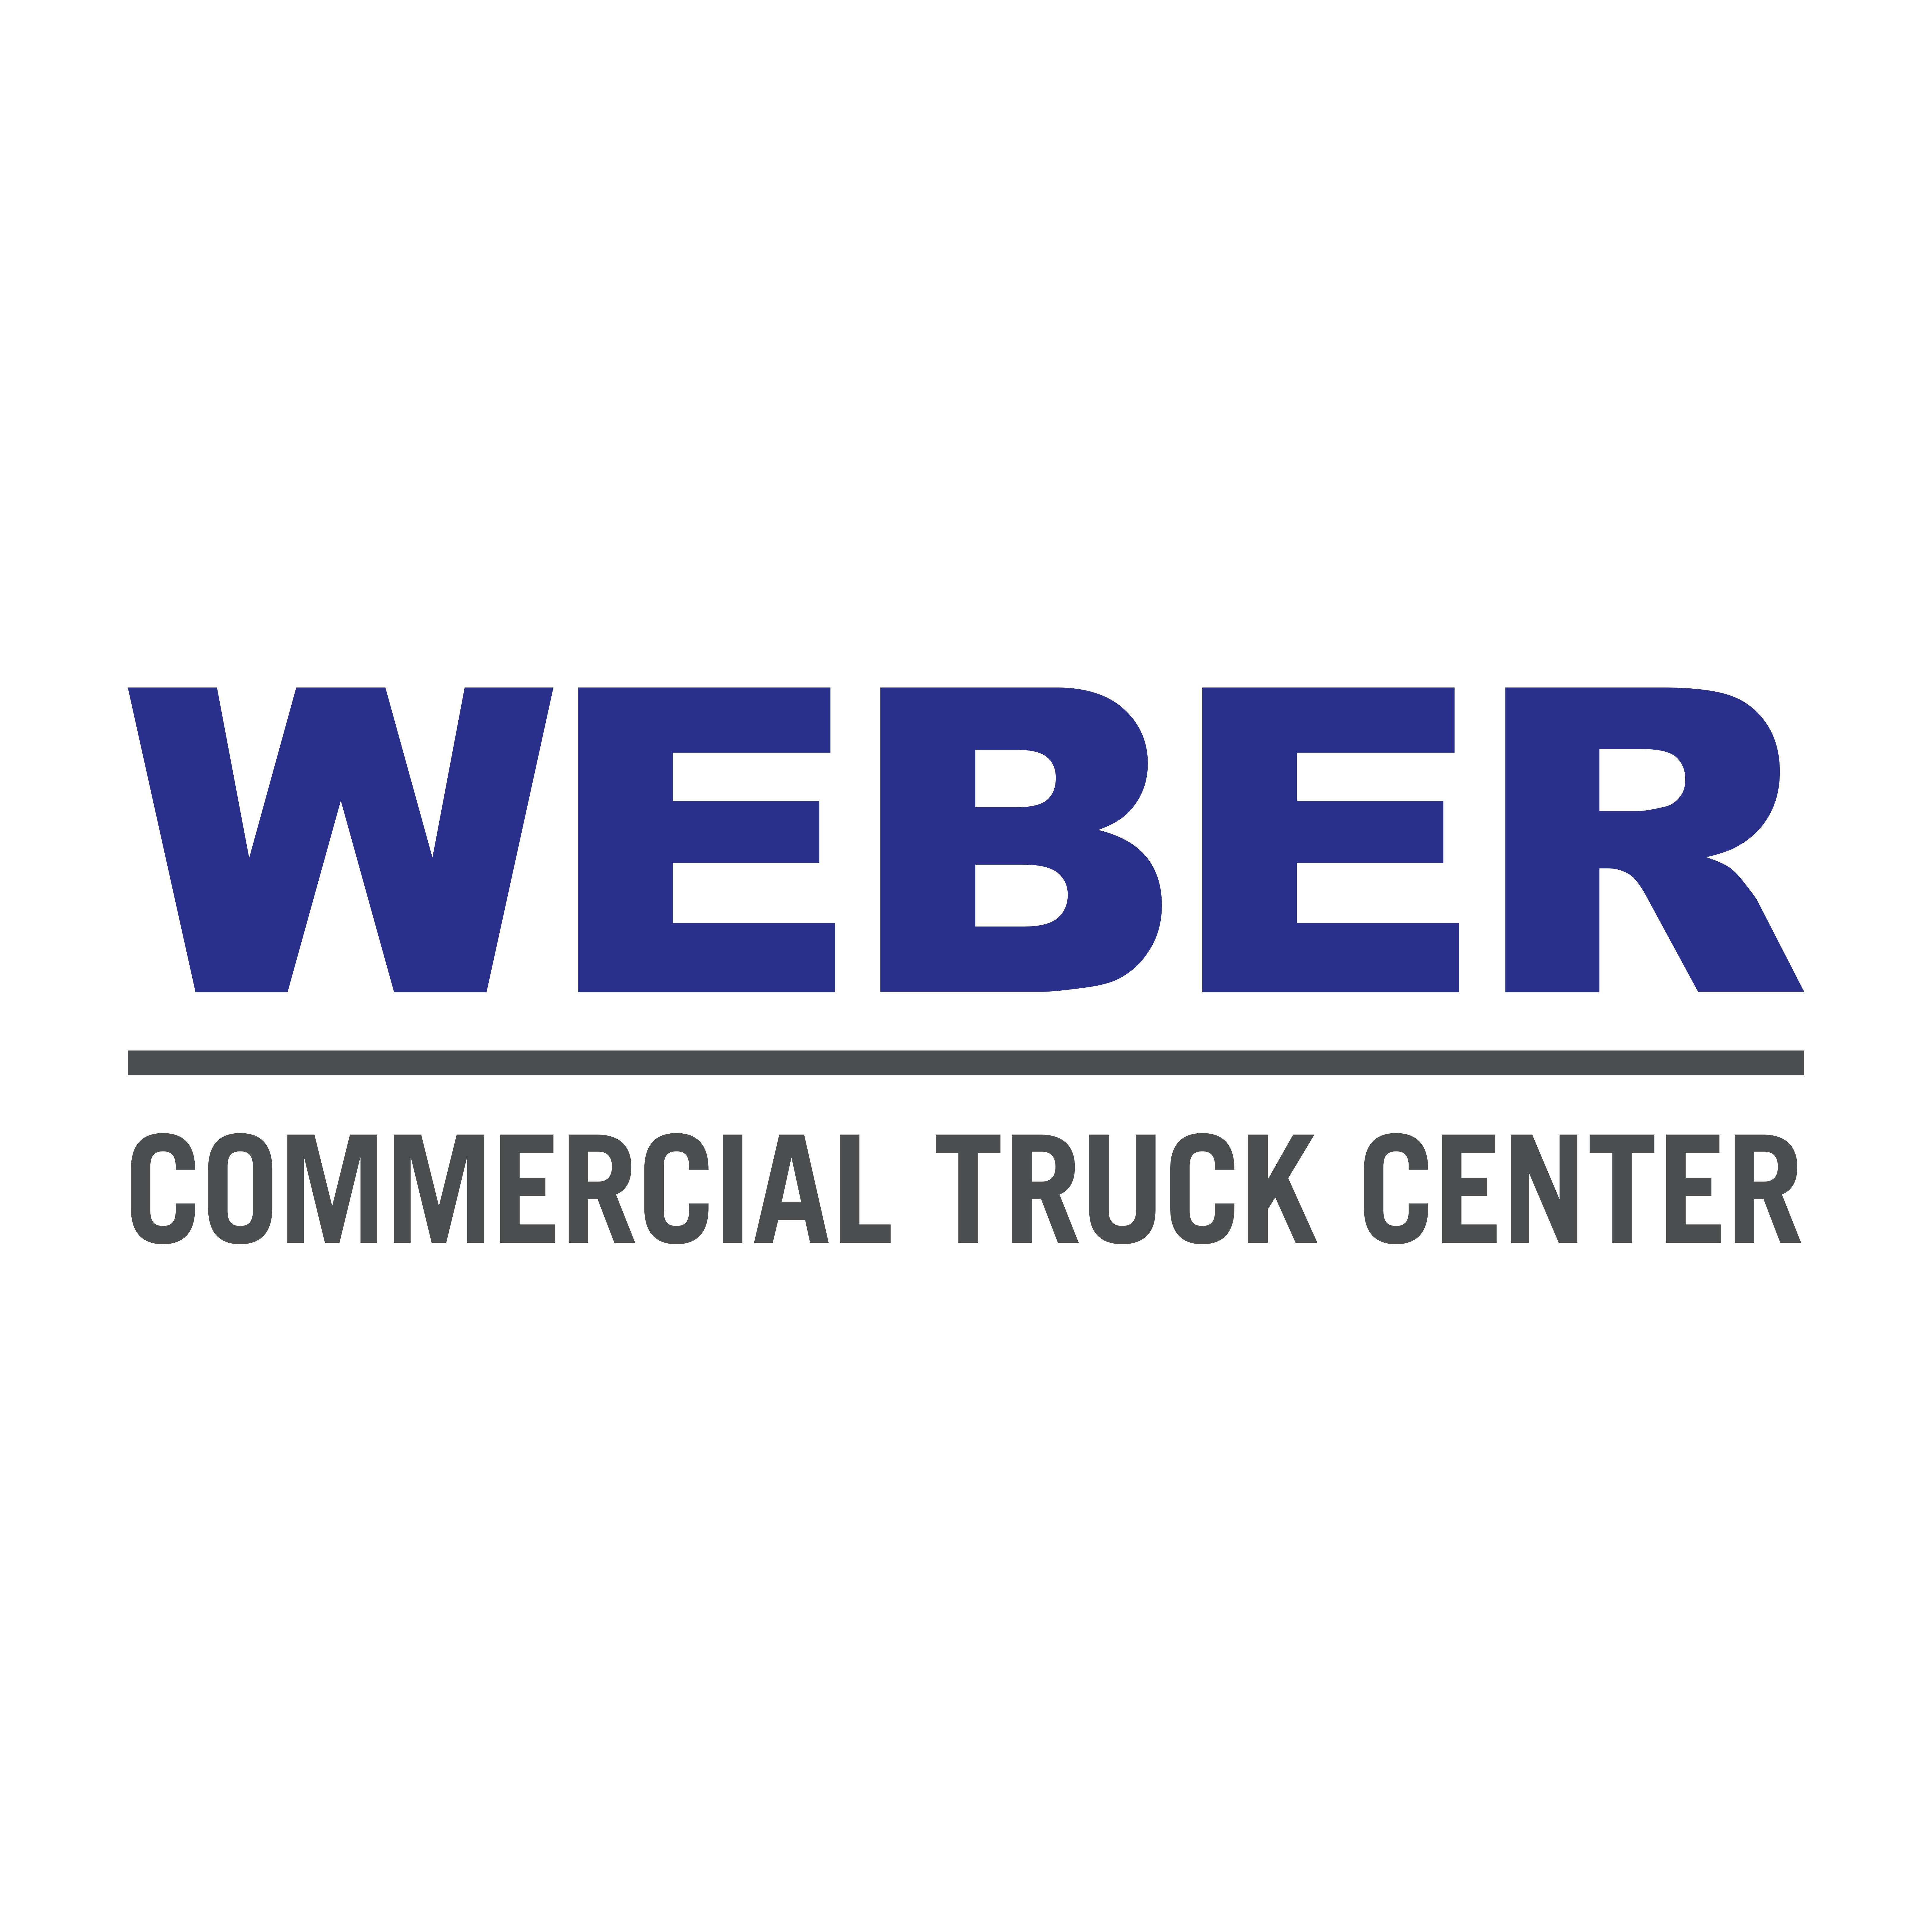 Weber Commercial Truck Center - Granite City, IL 62040 - (877)875-6903 | ShowMeLocal.com